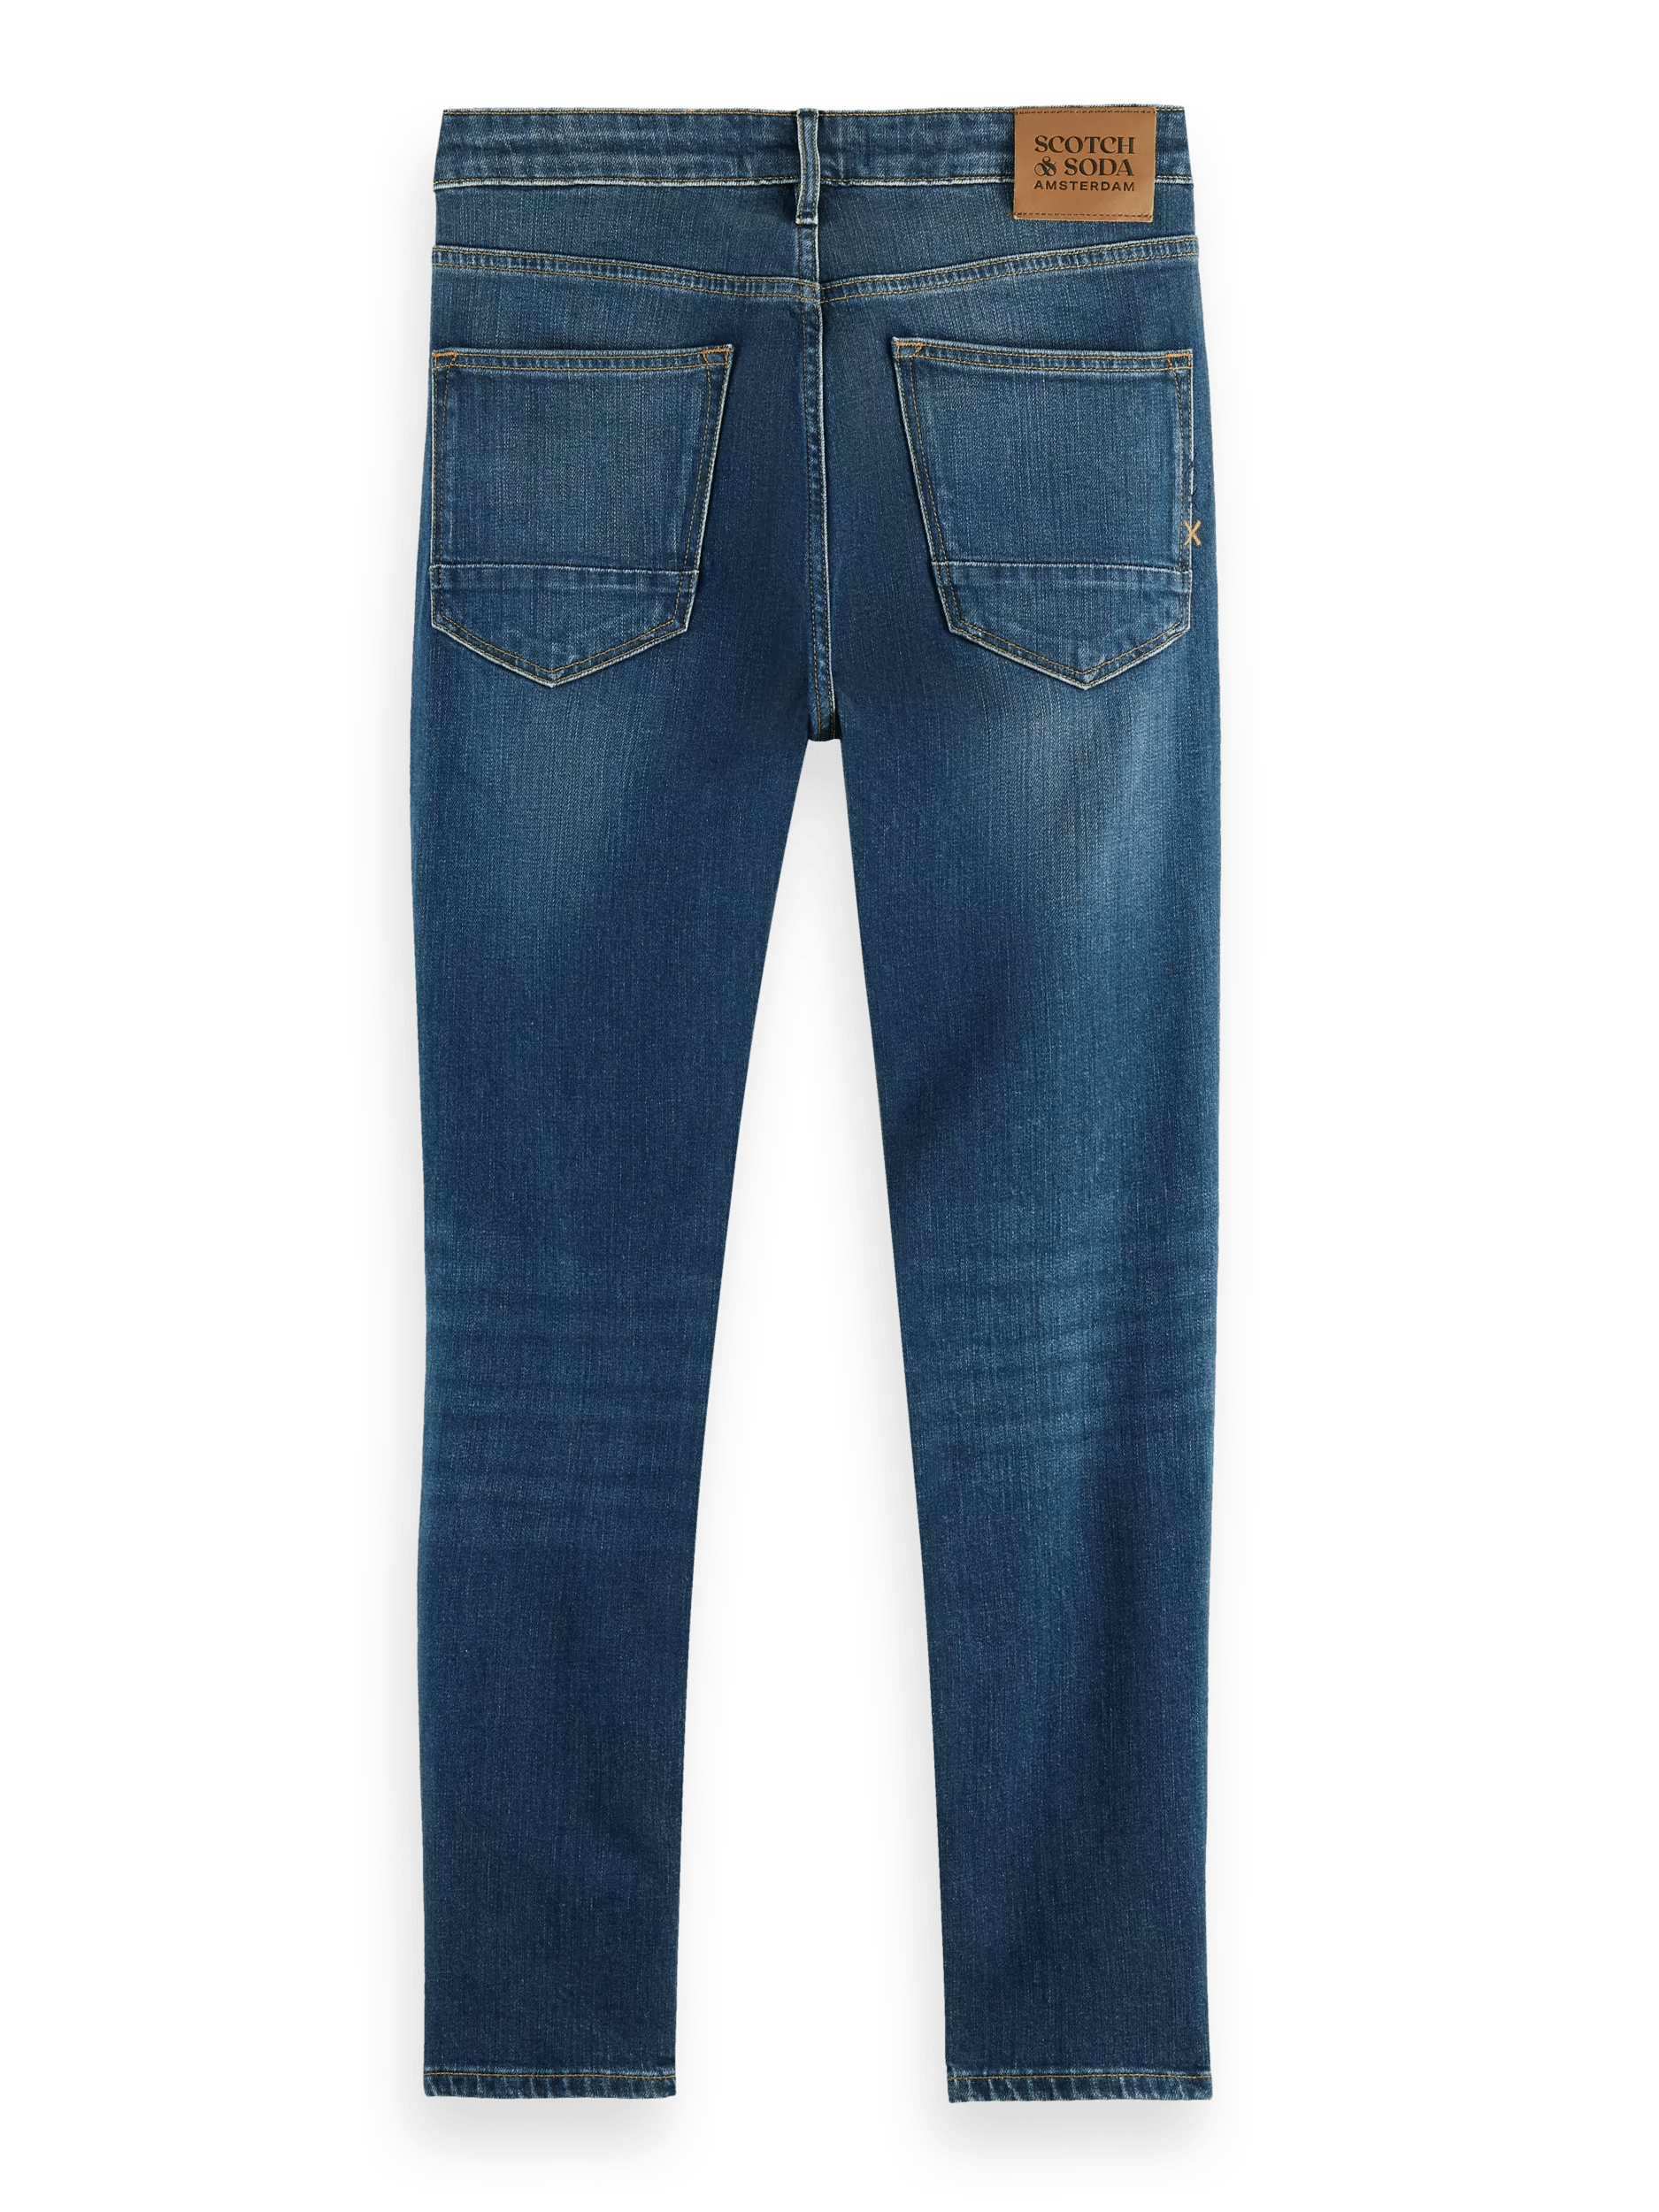 Scotch & Soda The Skim skinny jeans van biologisch katoen - Classic blue BCK